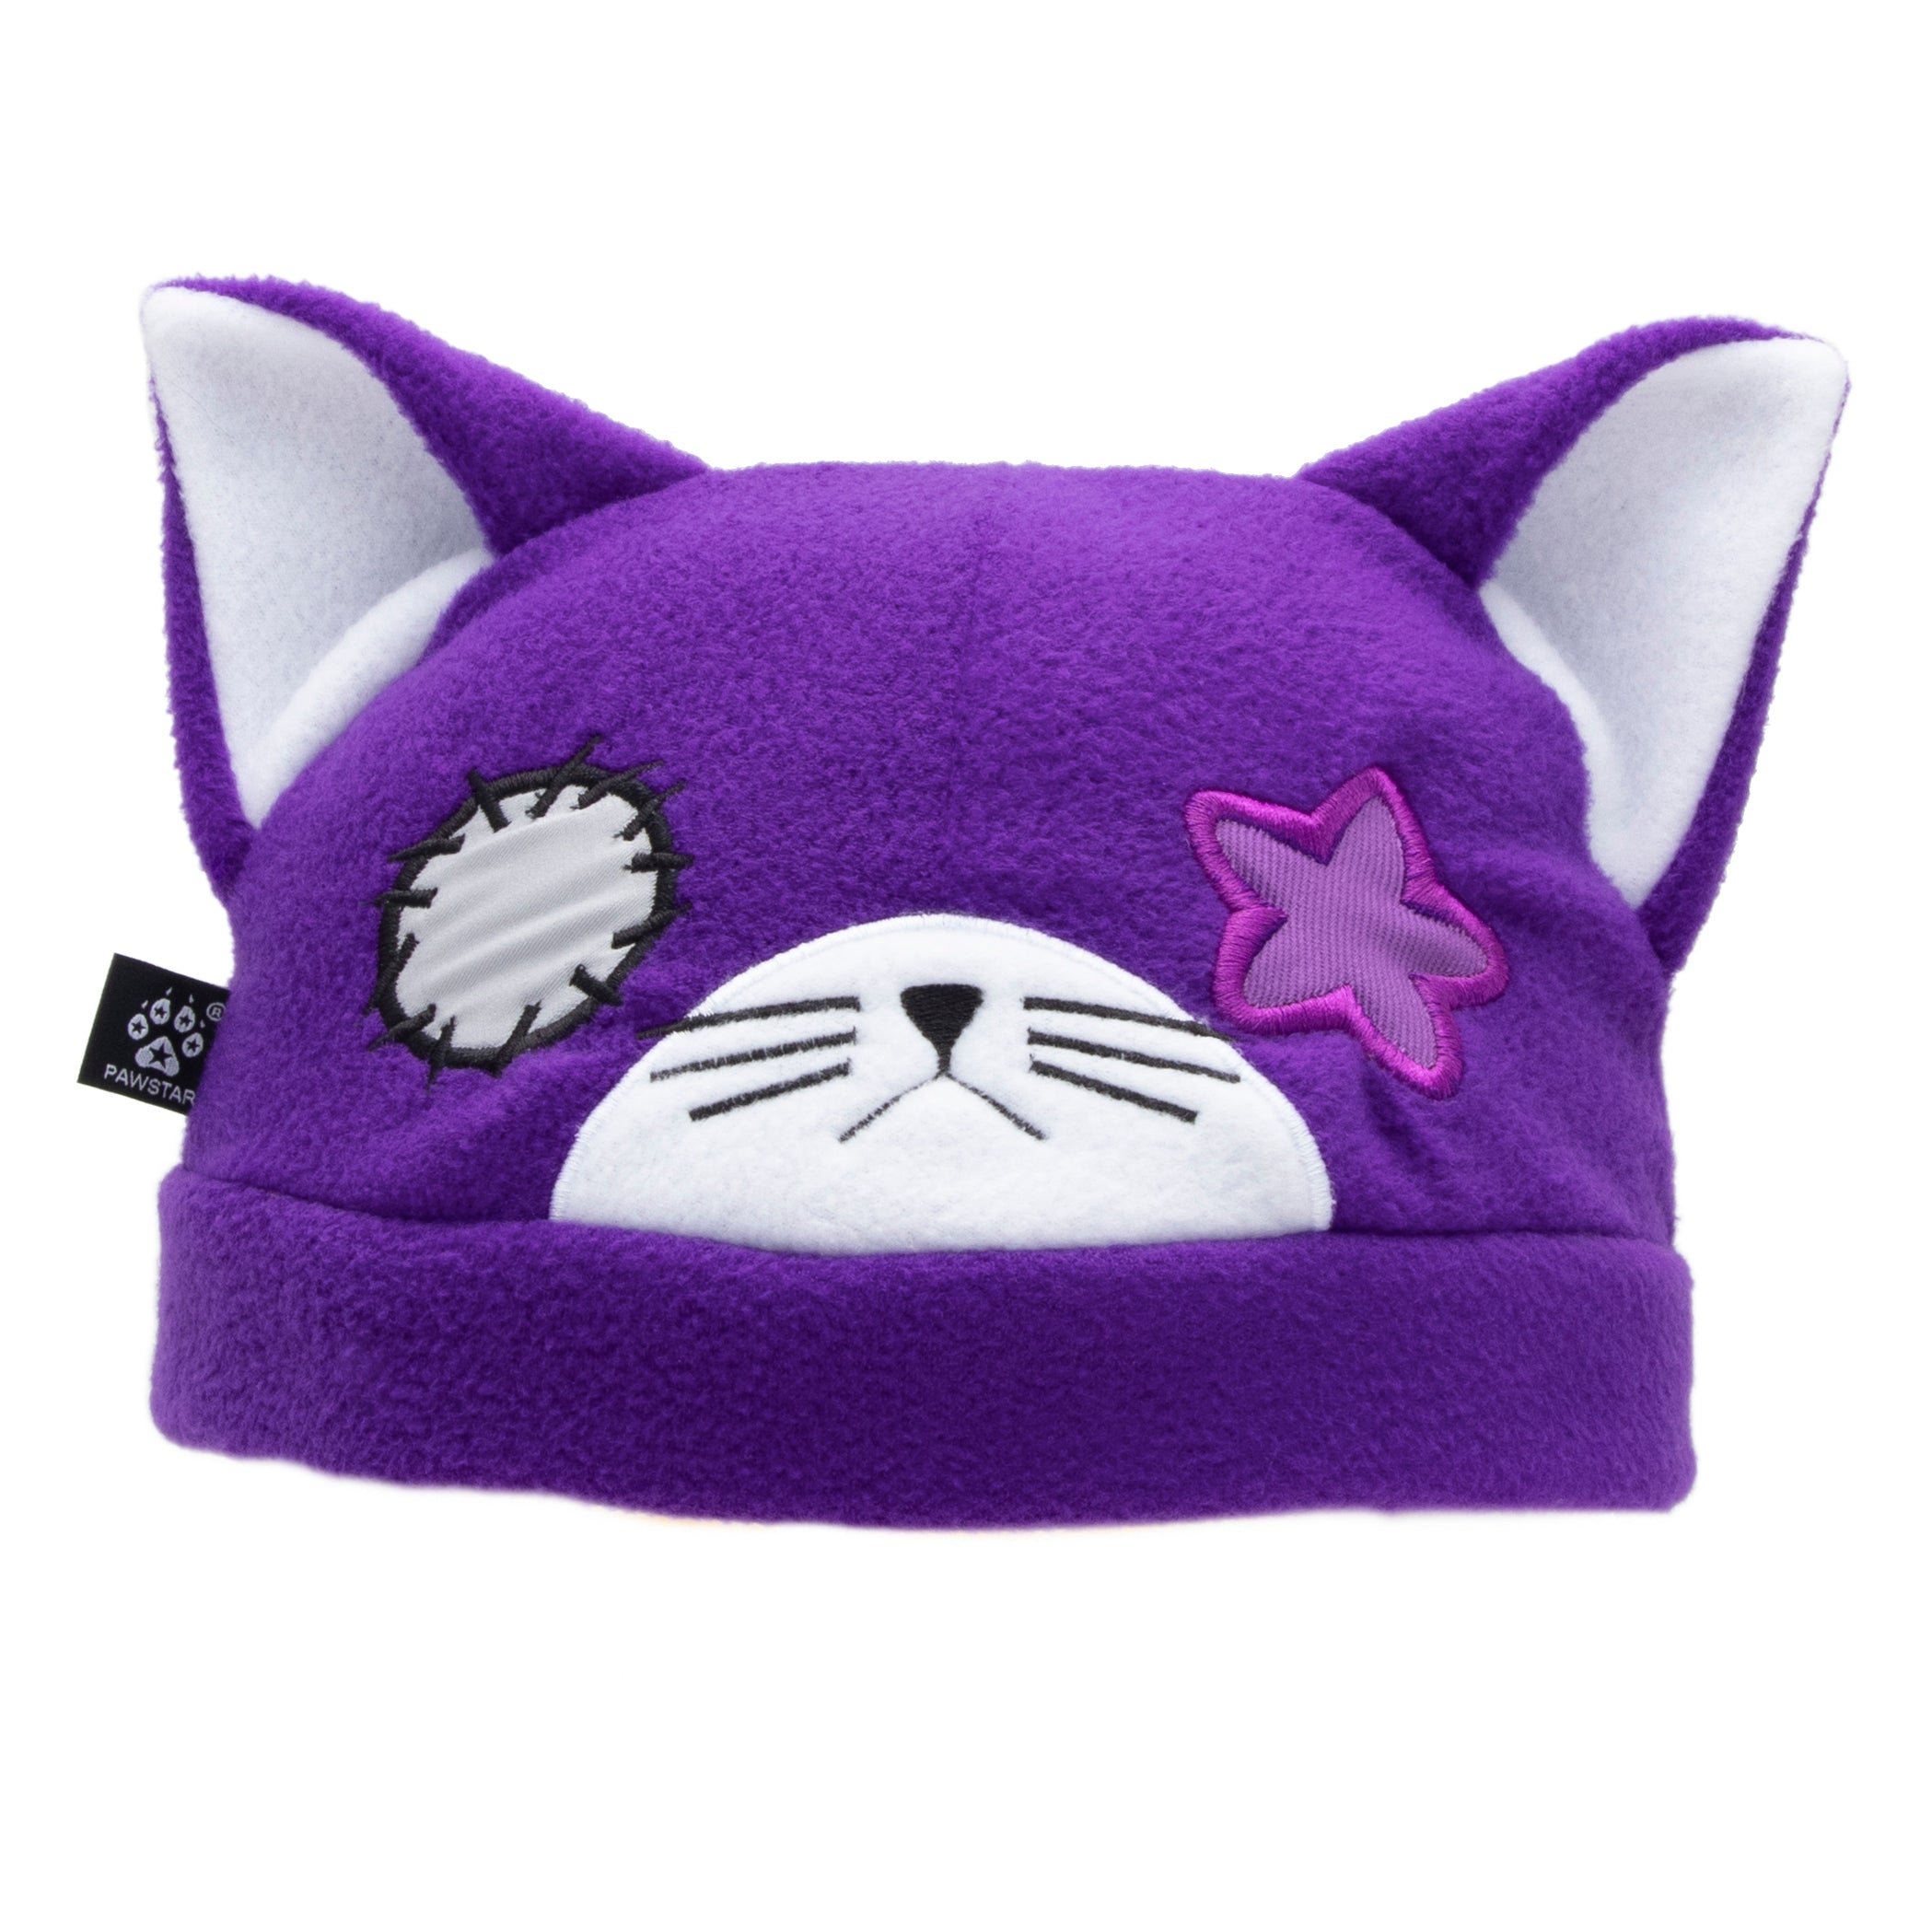 Thimbles The Ragdoll Kitty Hat - Pawstar Pawstar Fleece Hats cat, cosplay, costume, Feline, furry, hat, ship-30day, thimbles